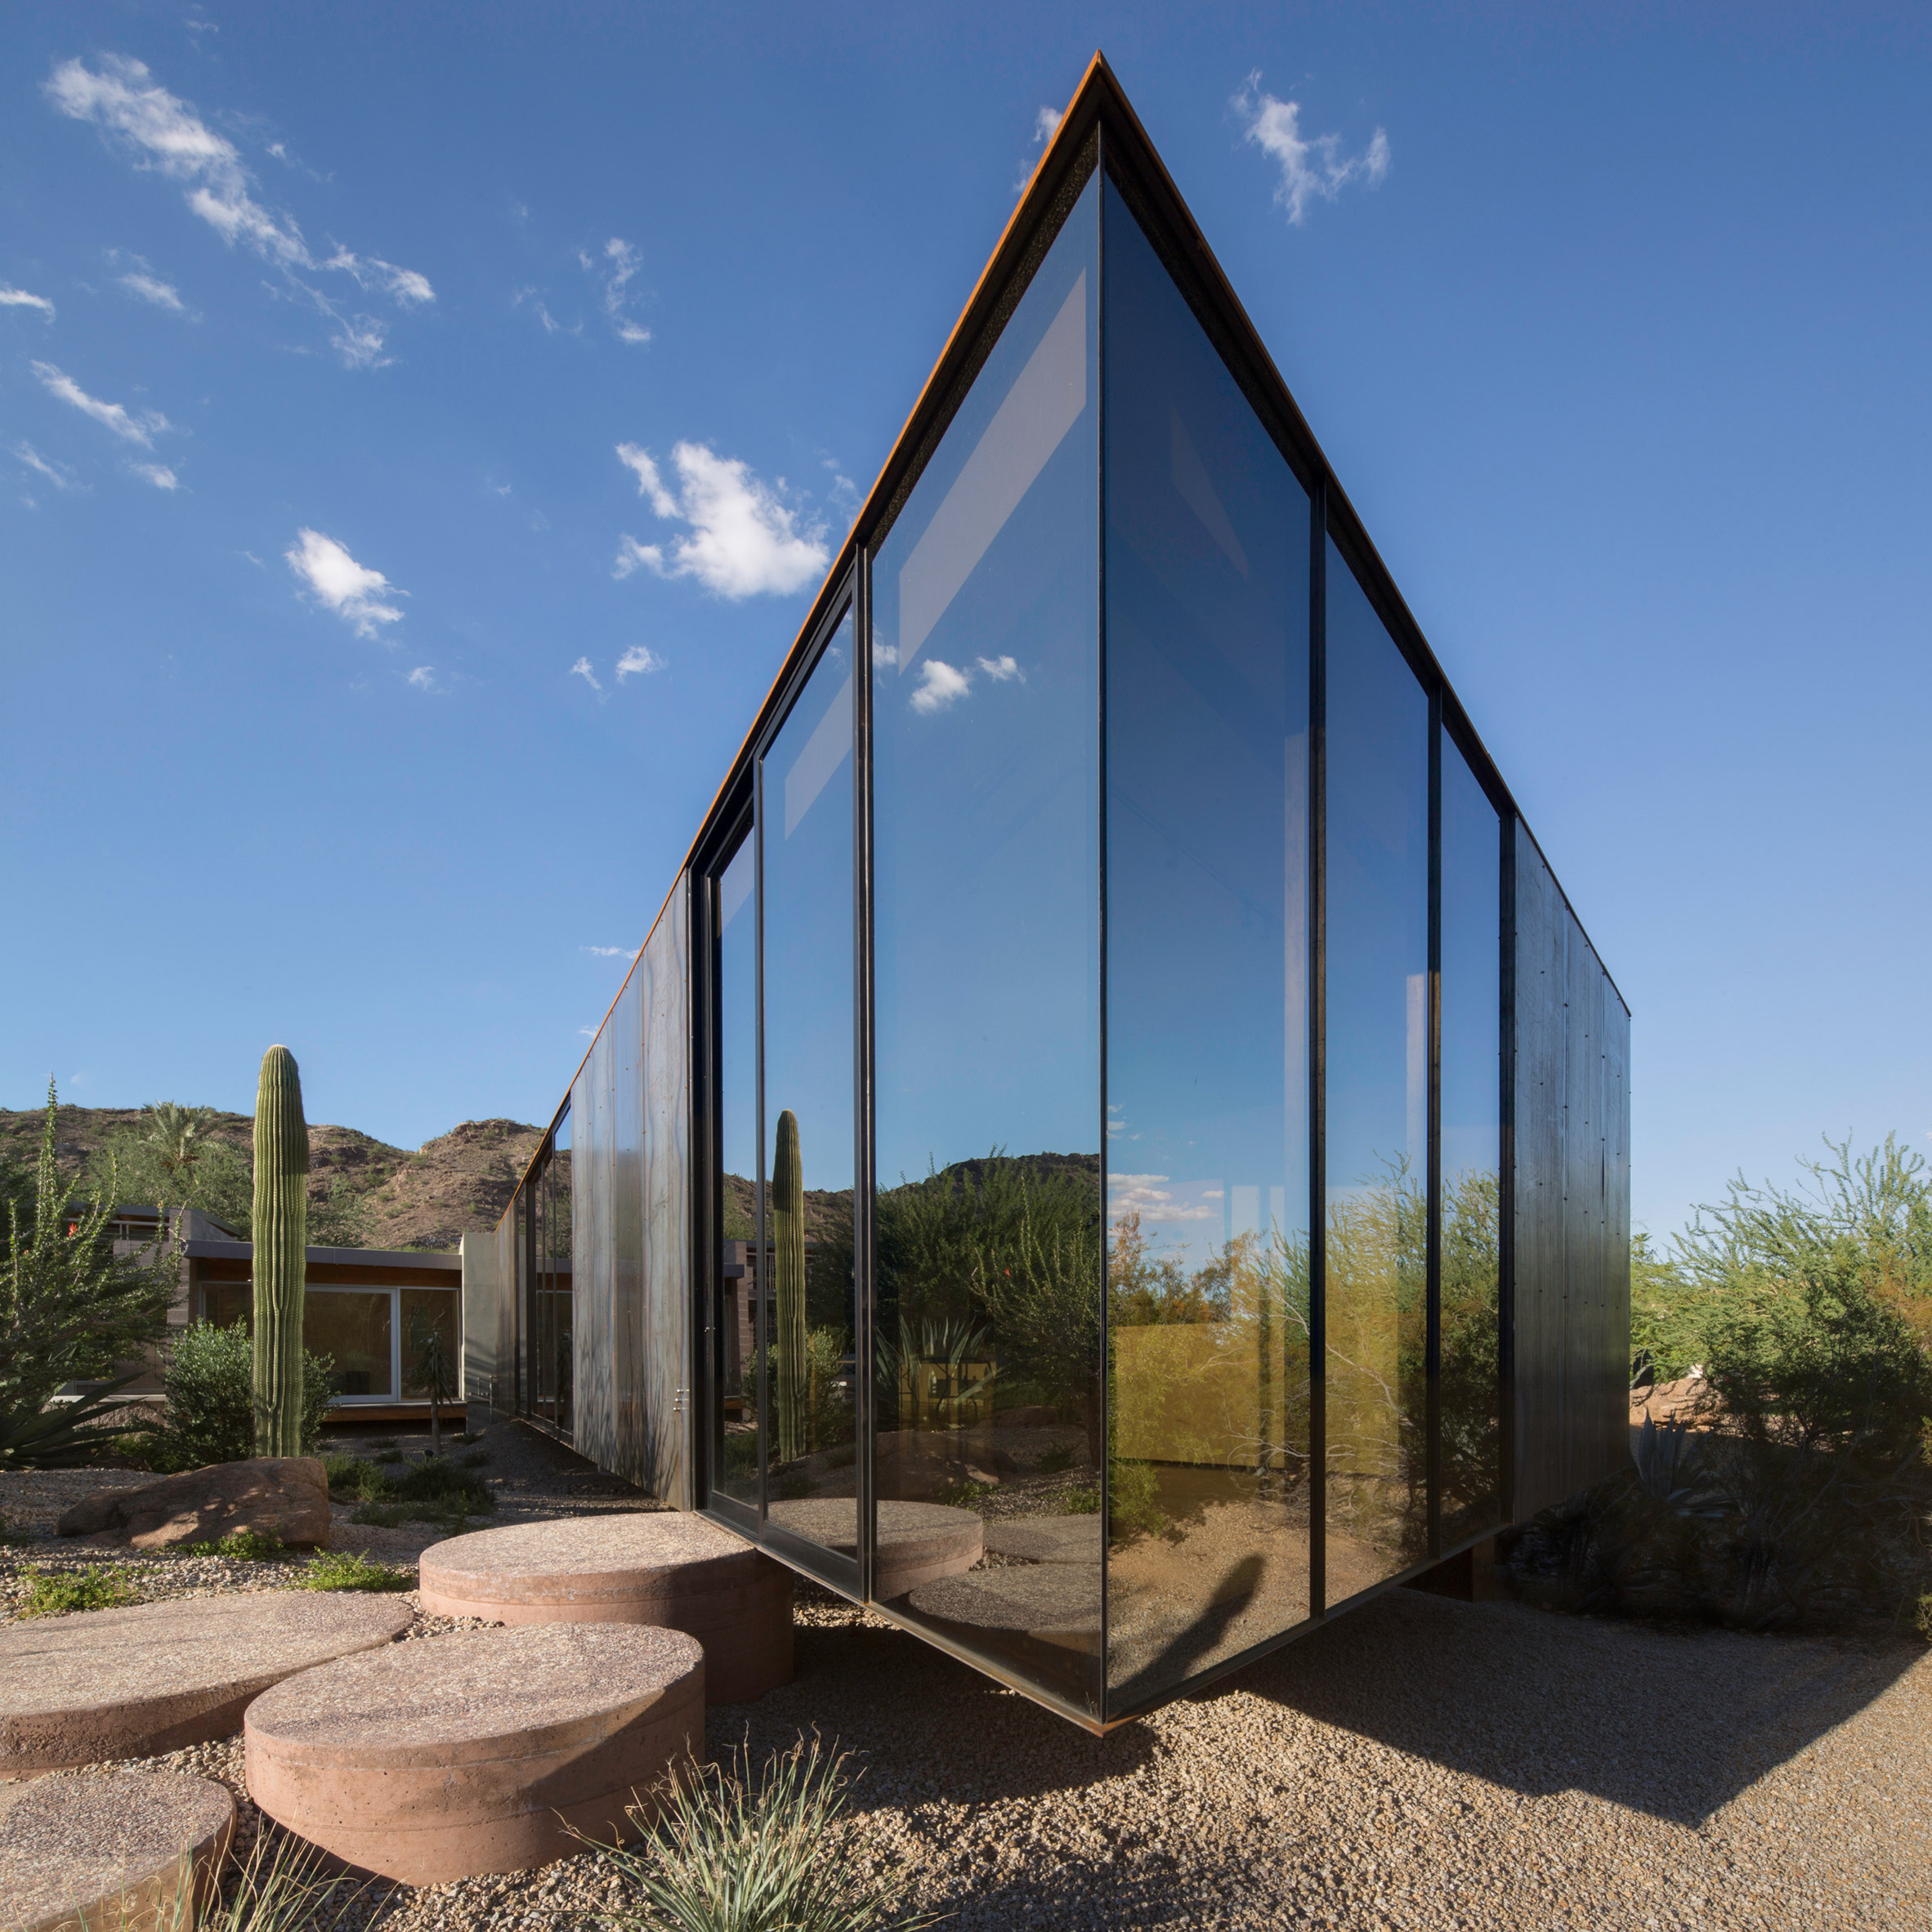 The Little Art Studio by Chen + Suchart reflects desert landscape in Arizona